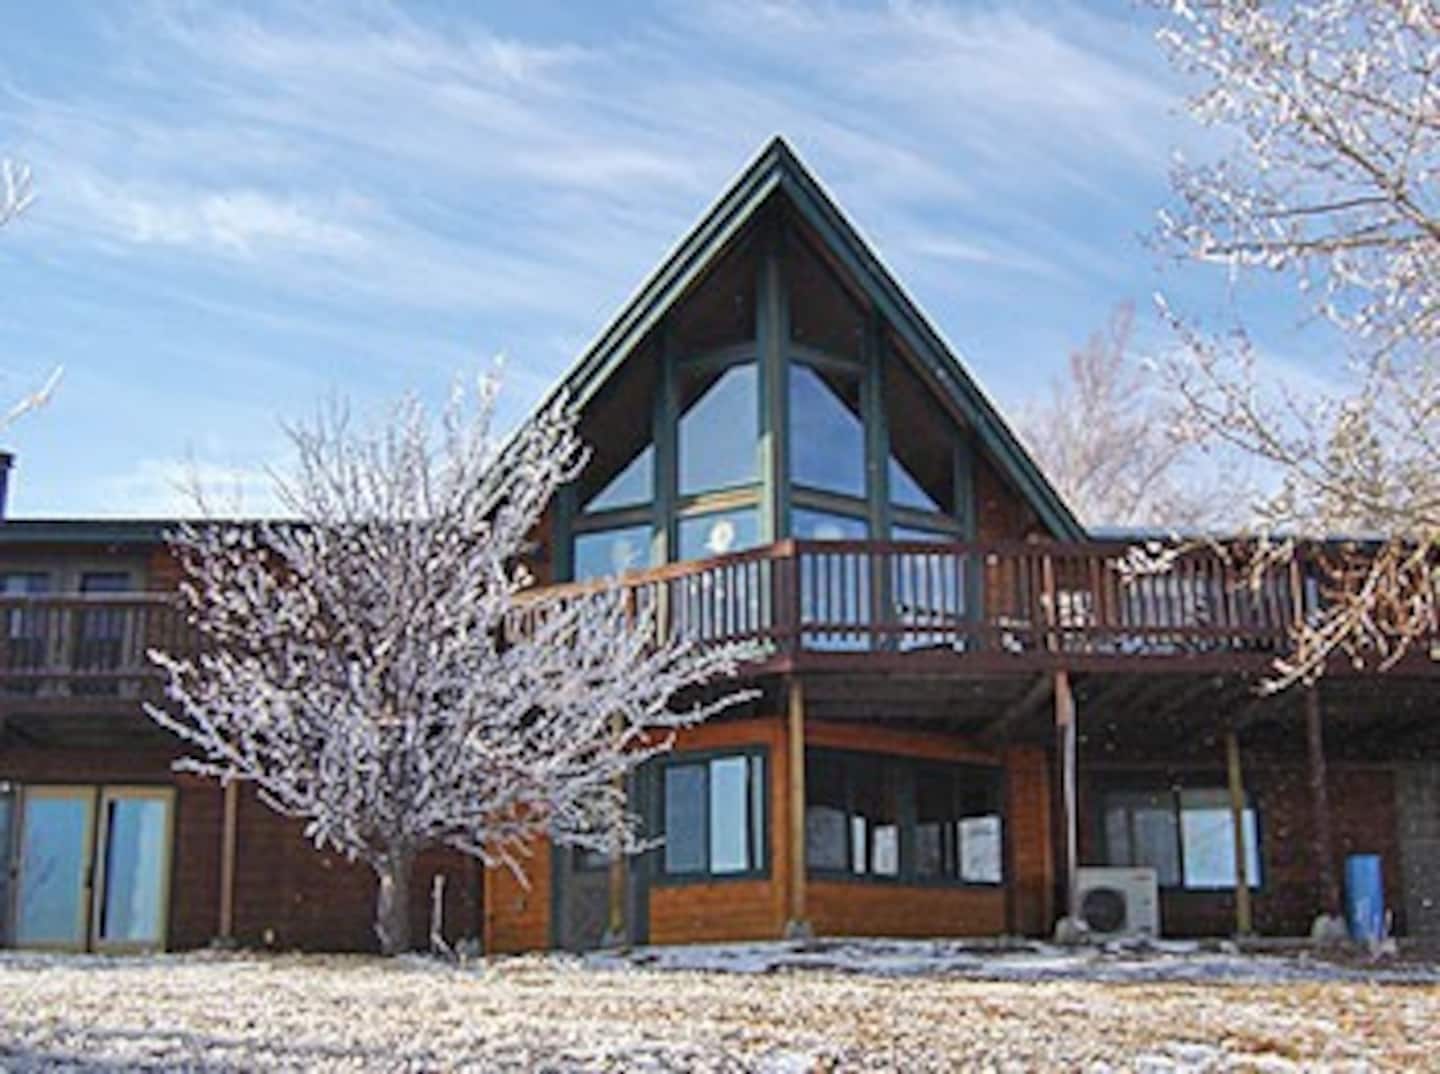 The Lodge Cabin Rental in North Dakota